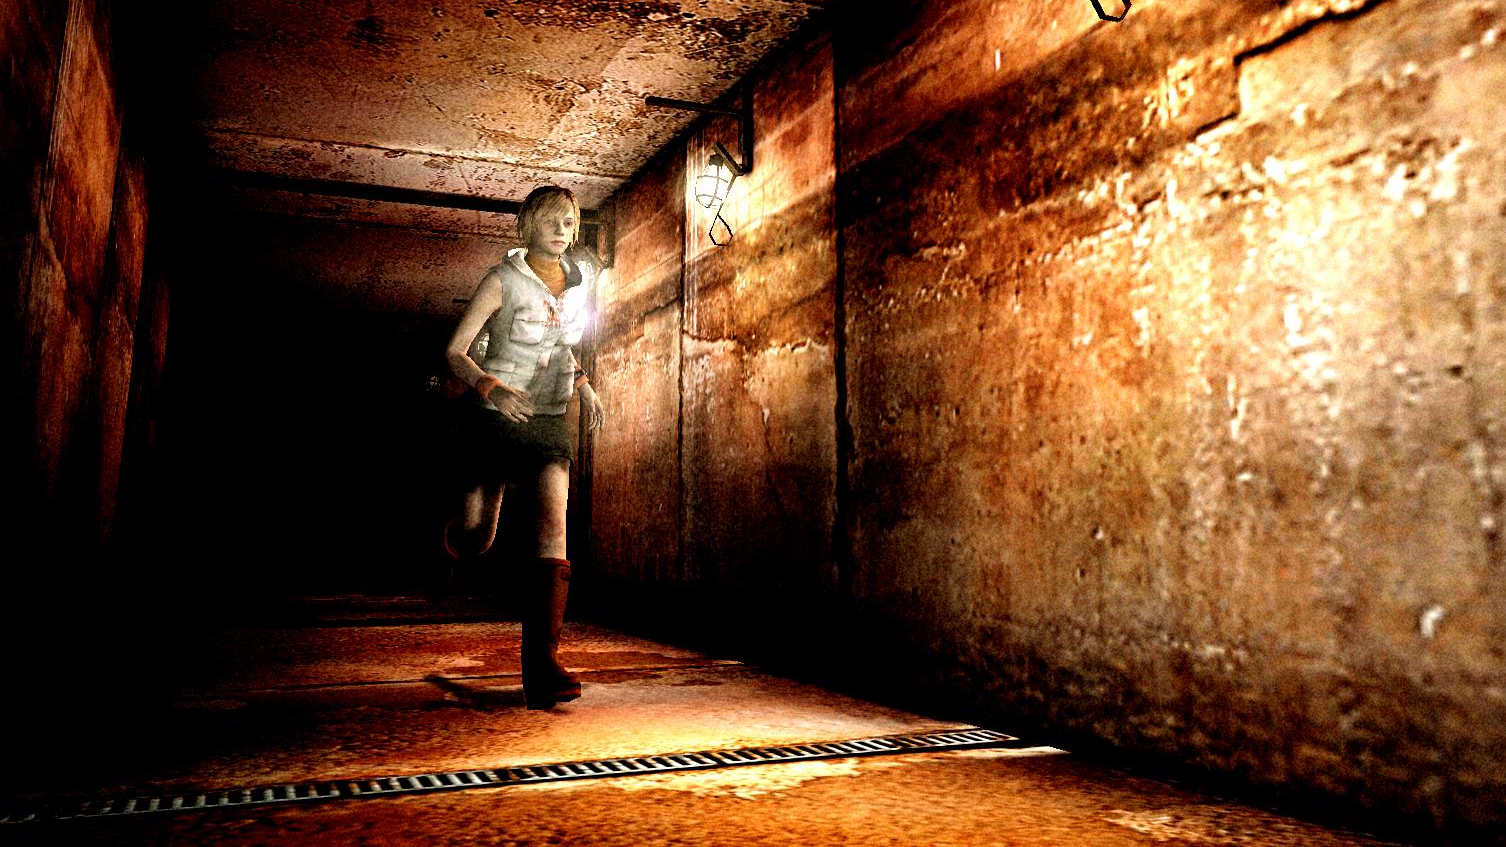 Silent Hill 3's Heather Mason running down a creepy corridor